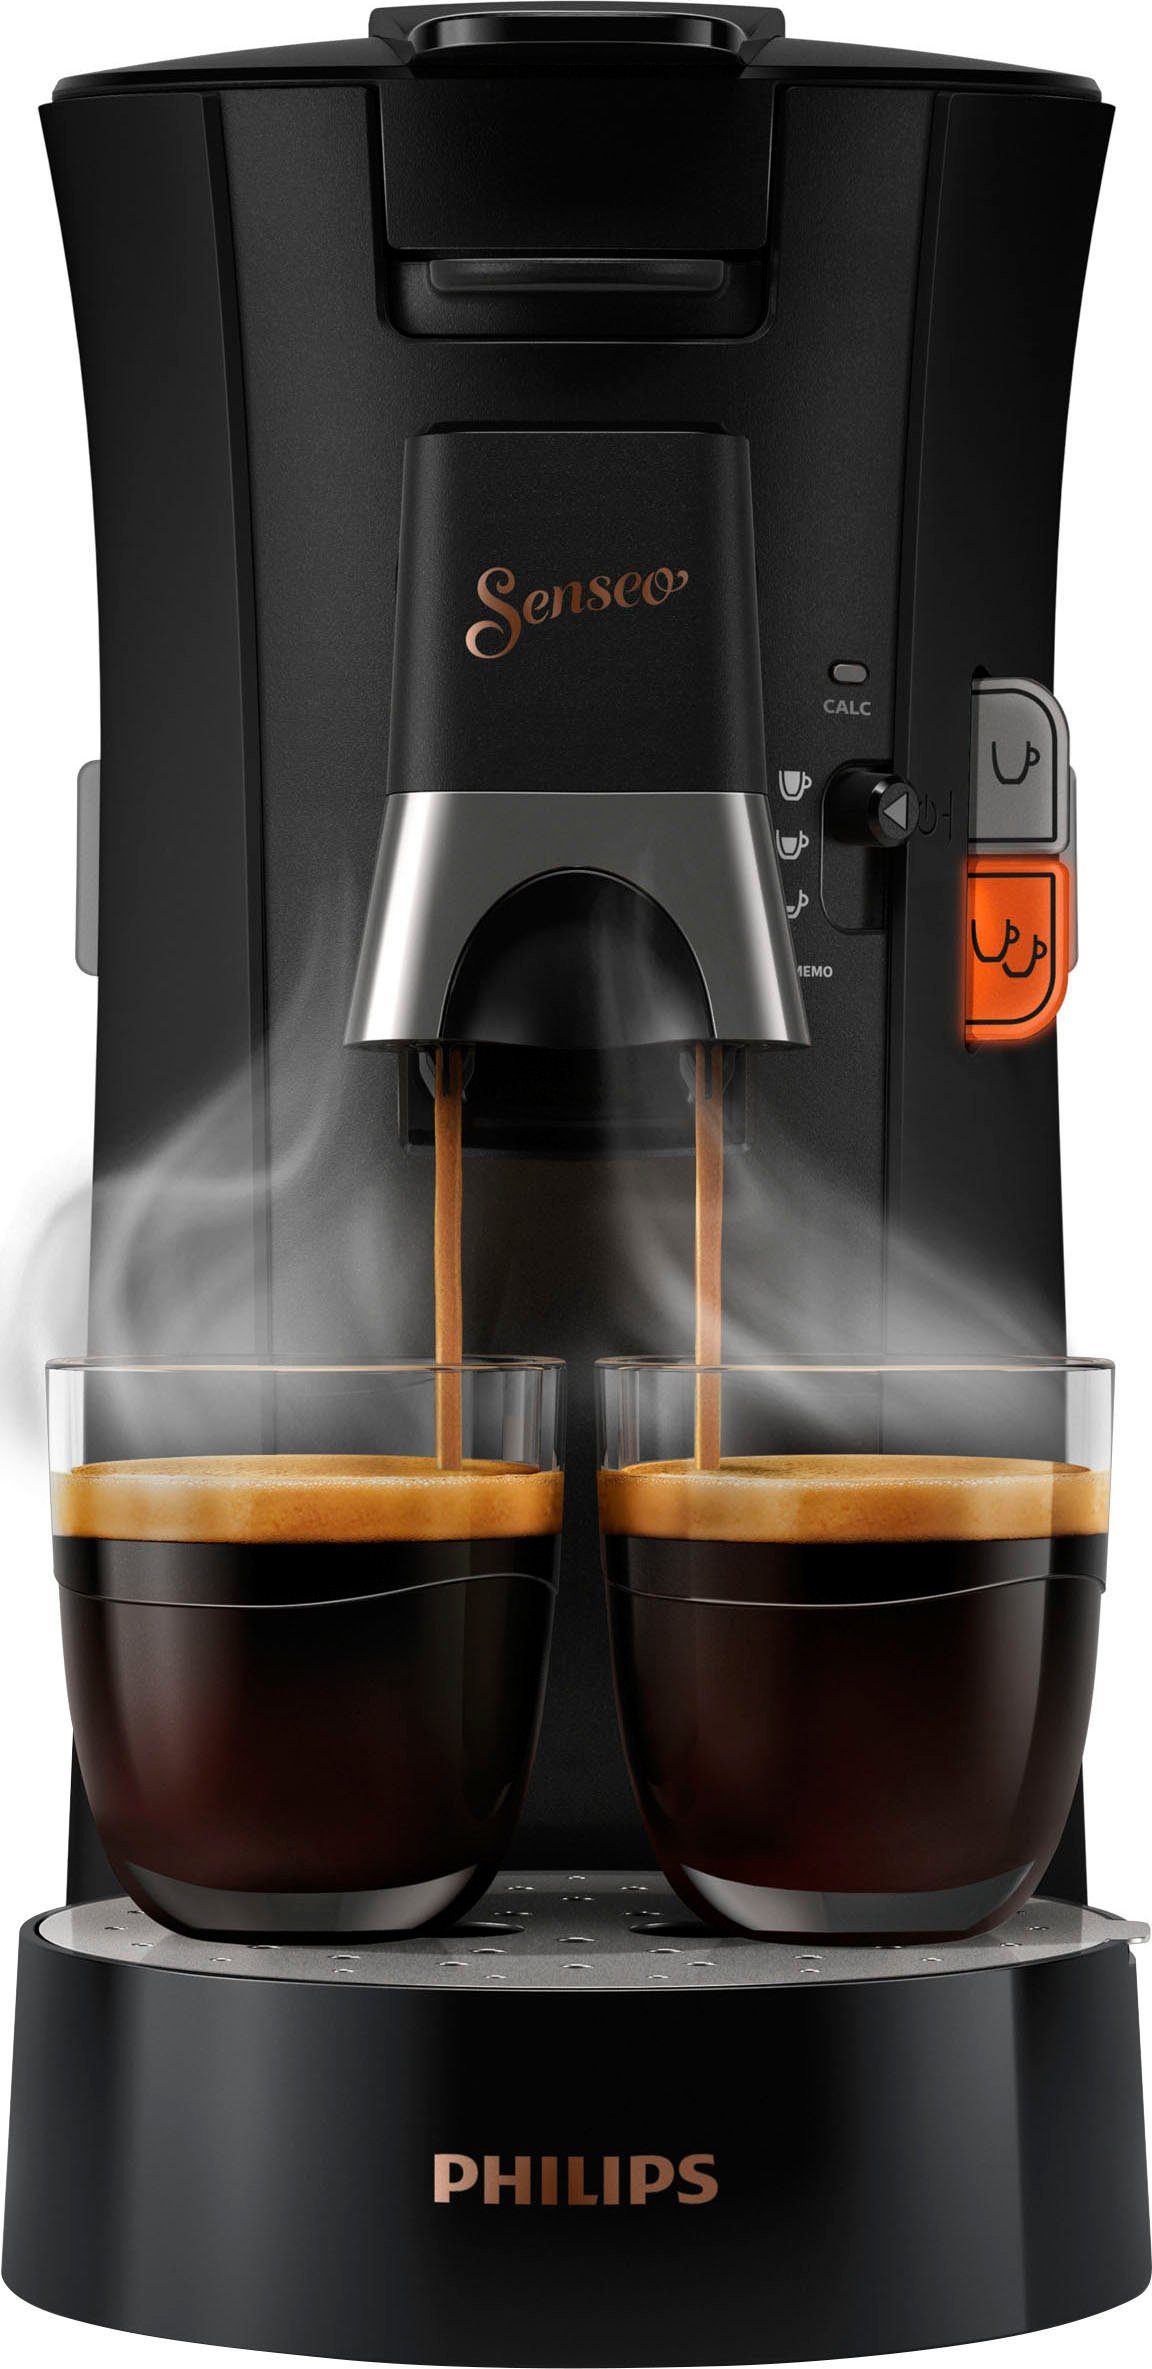 mit Plastik, 21% Memo-Funktion 3 Senseo Kaffeespezialitäten, aus Select Philips Kaffeepadmaschine CSA240/60, recyceltem